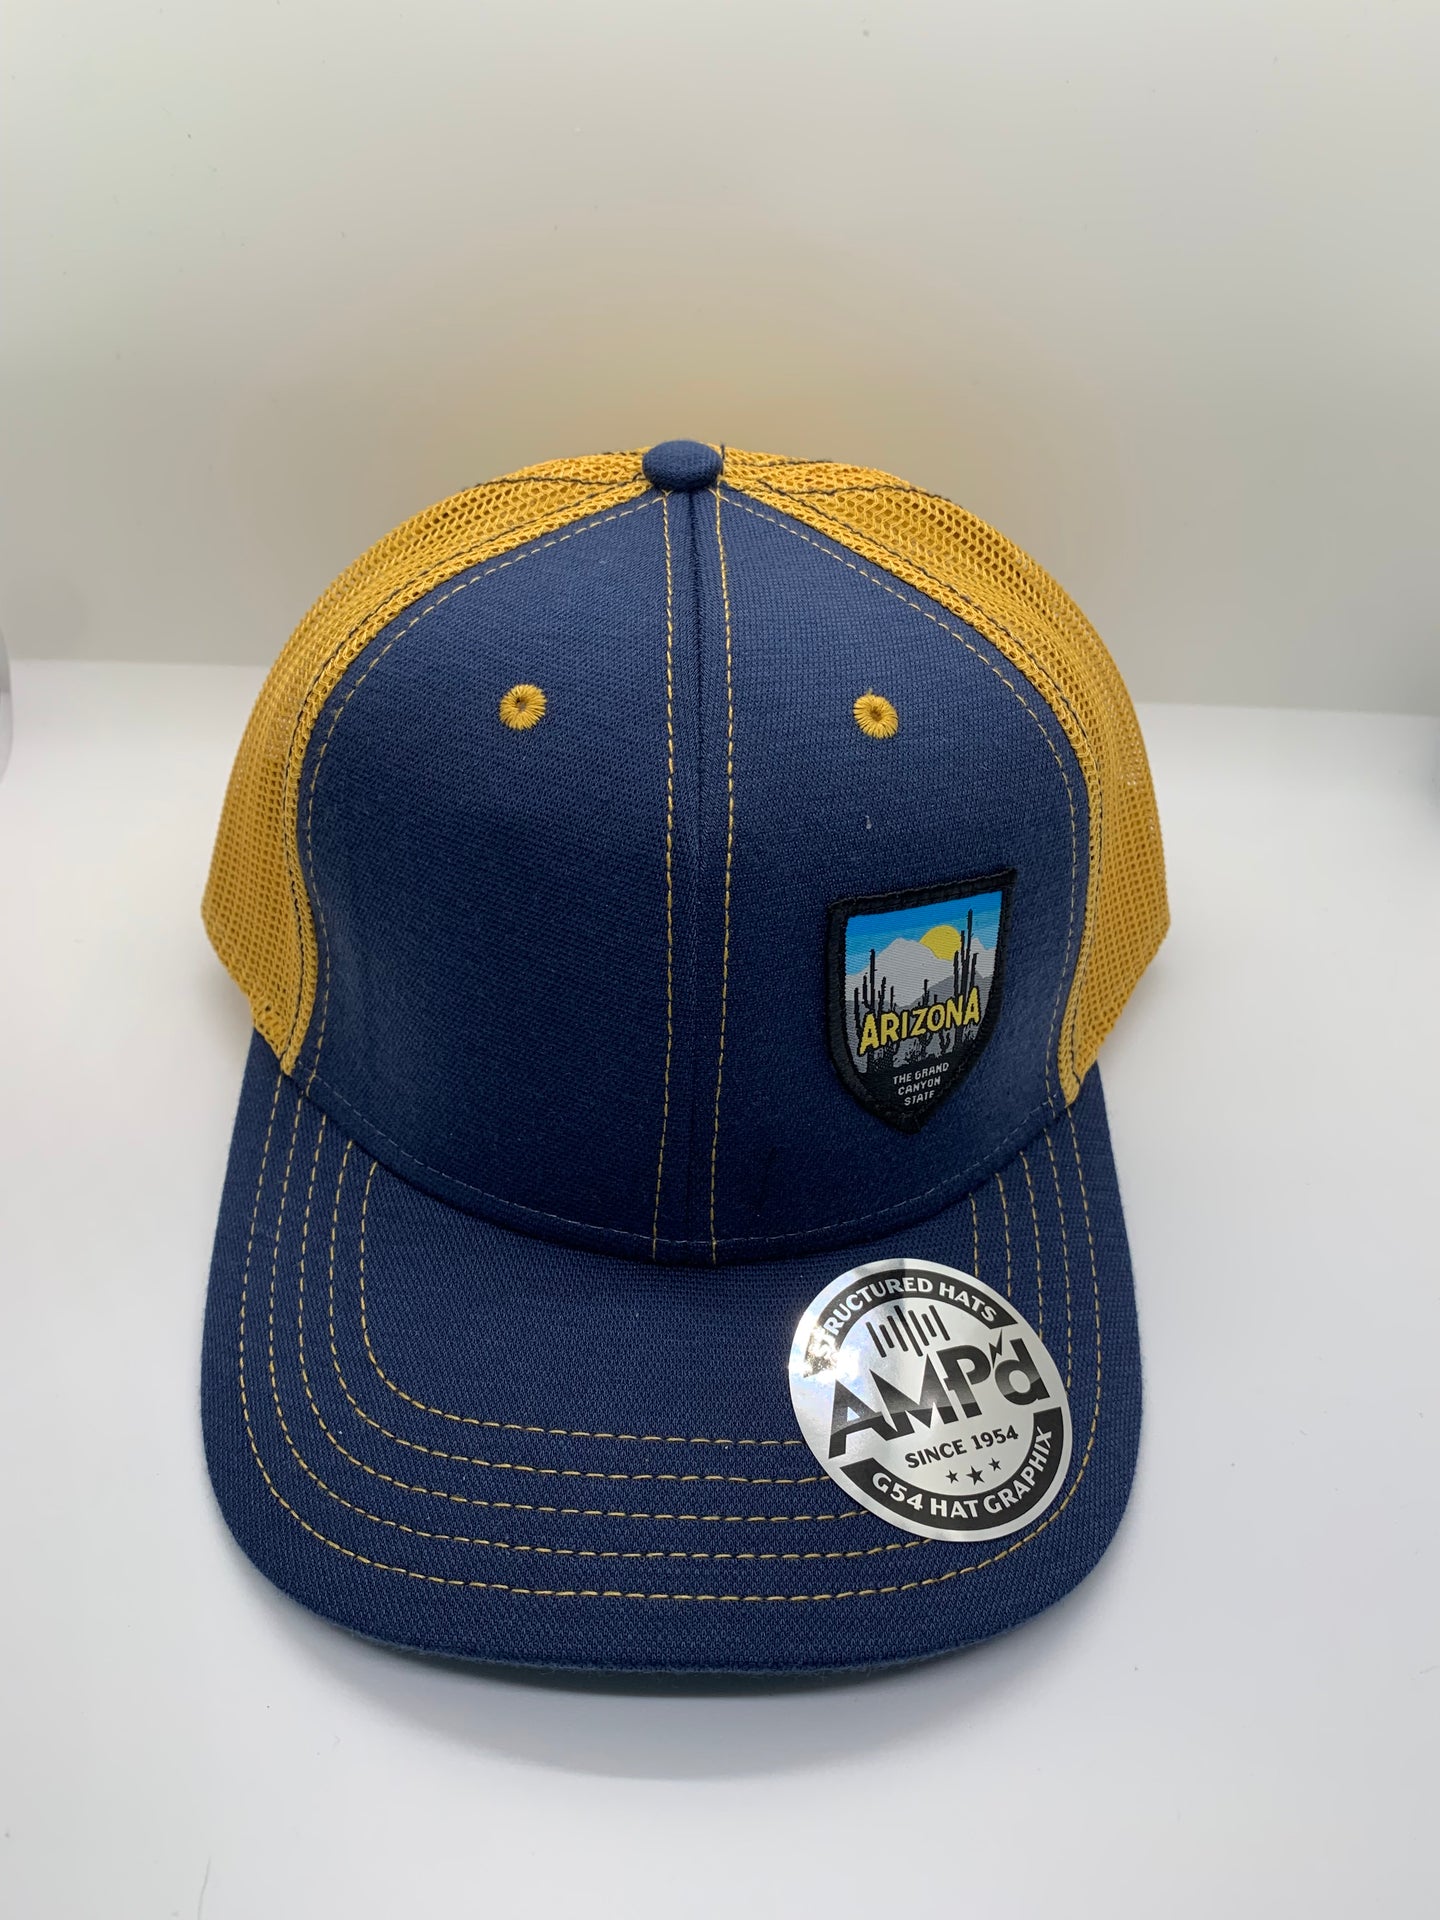 G54 Blue and Gold Arizona Trucker Hat